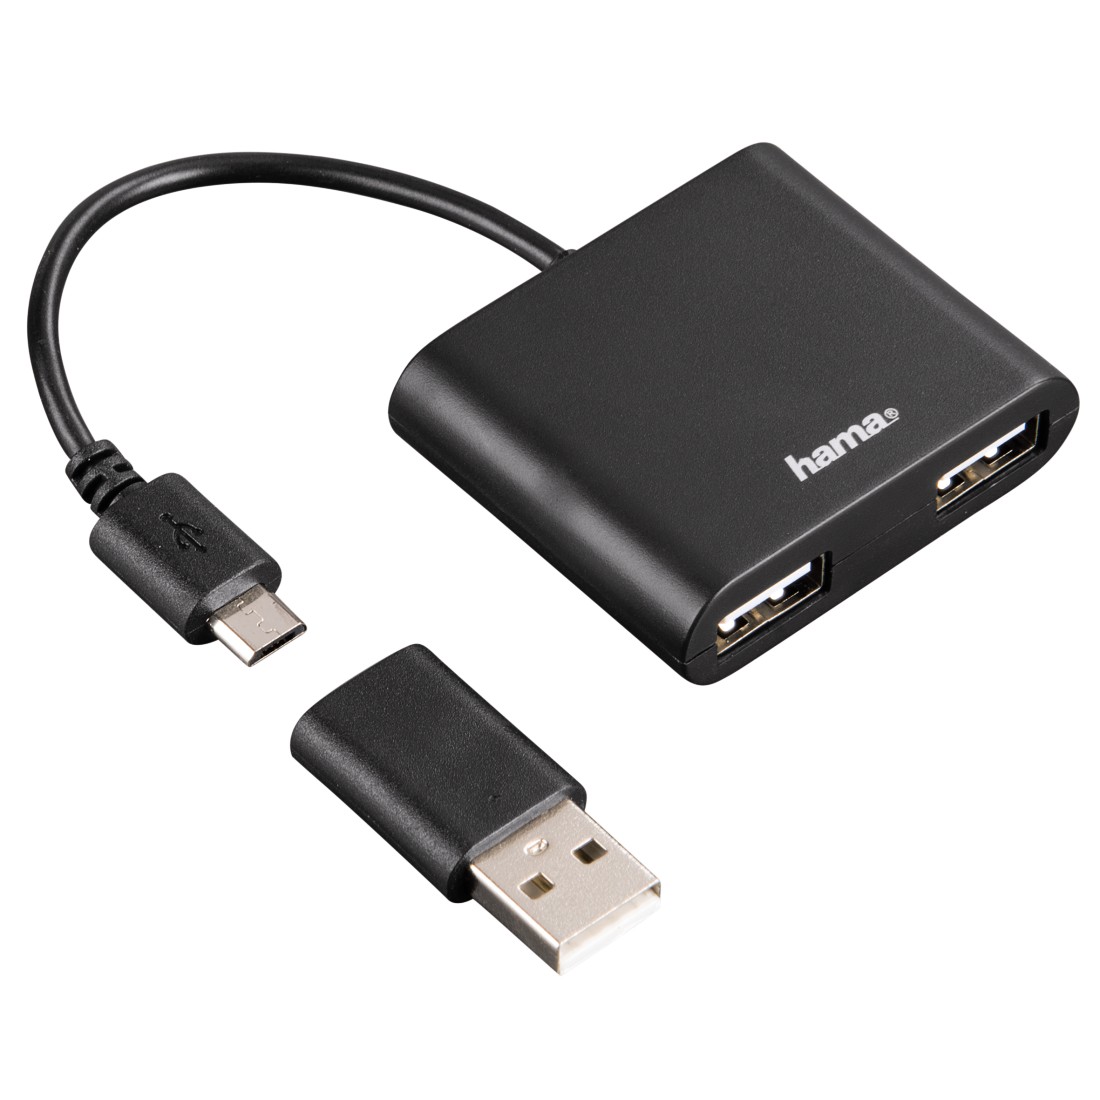 00054140 Hama USB 2.0 OTG Hub 1:2 for Smartphone/Tablet/Notebook/PC | hama .com